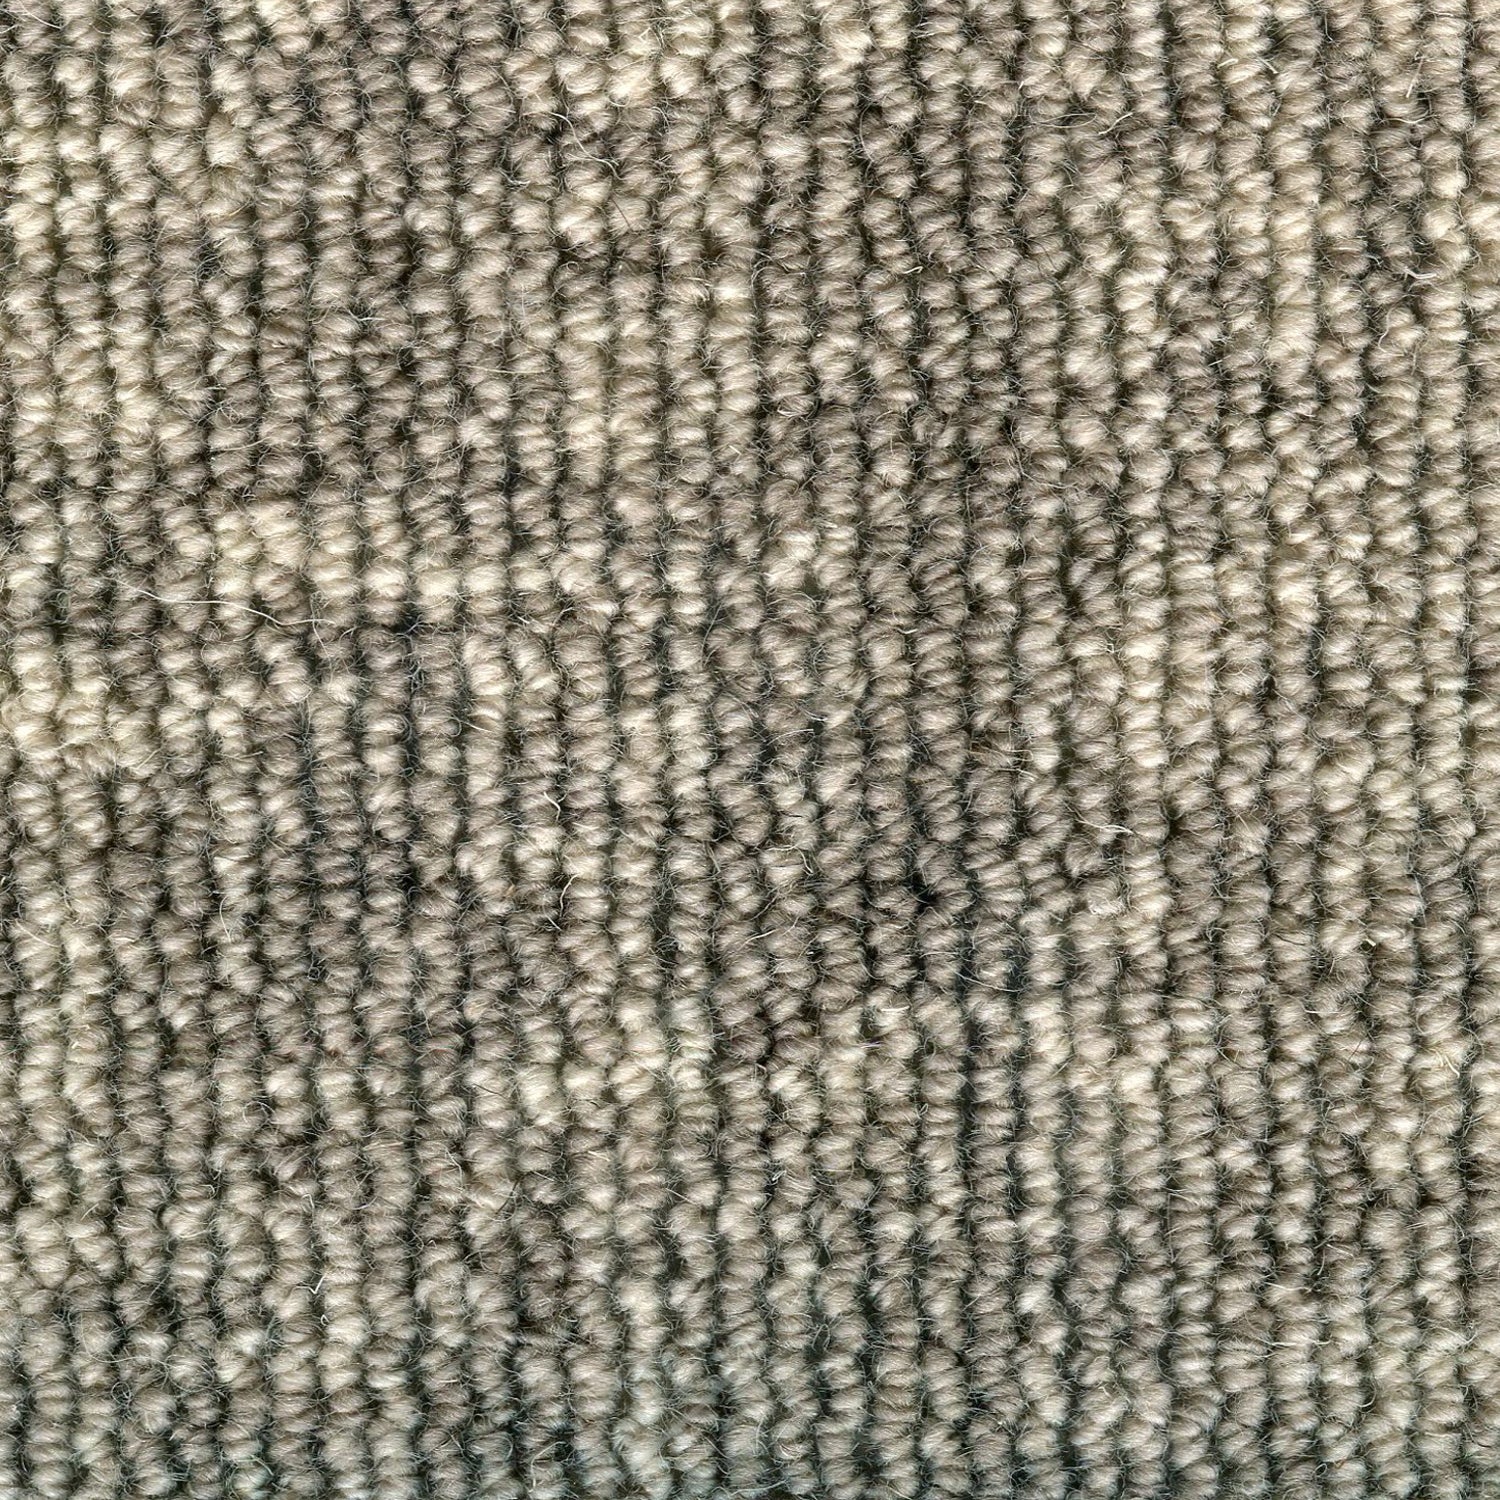 Wool broadloom carpet swatch in a chunky loop weave in mottled cream and sable.